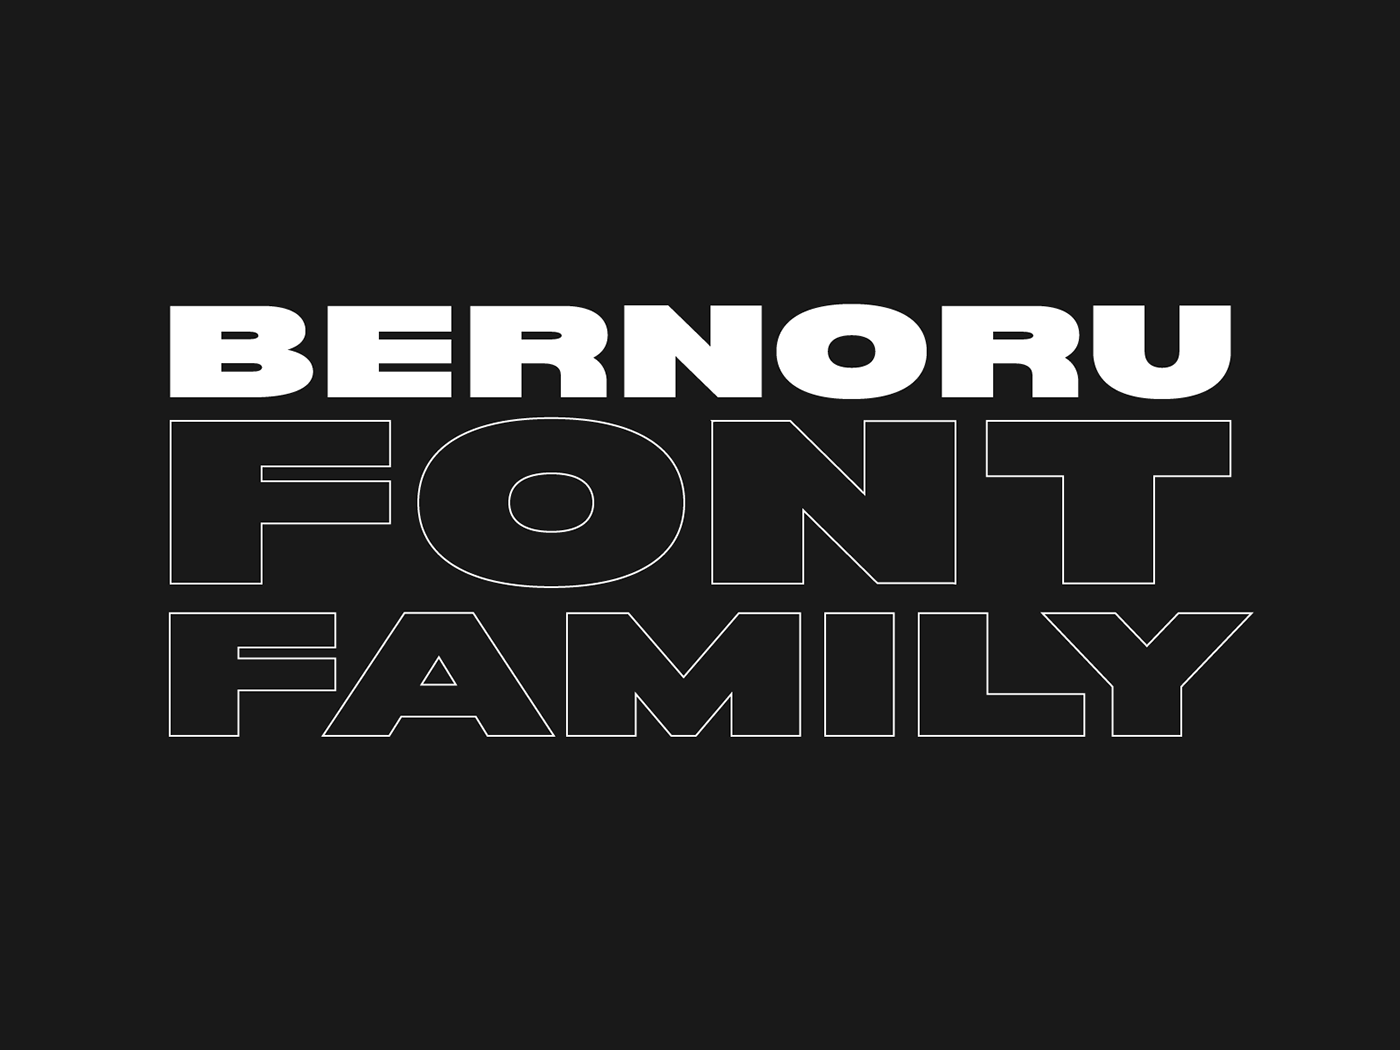 font family font Typeface sane serif bold